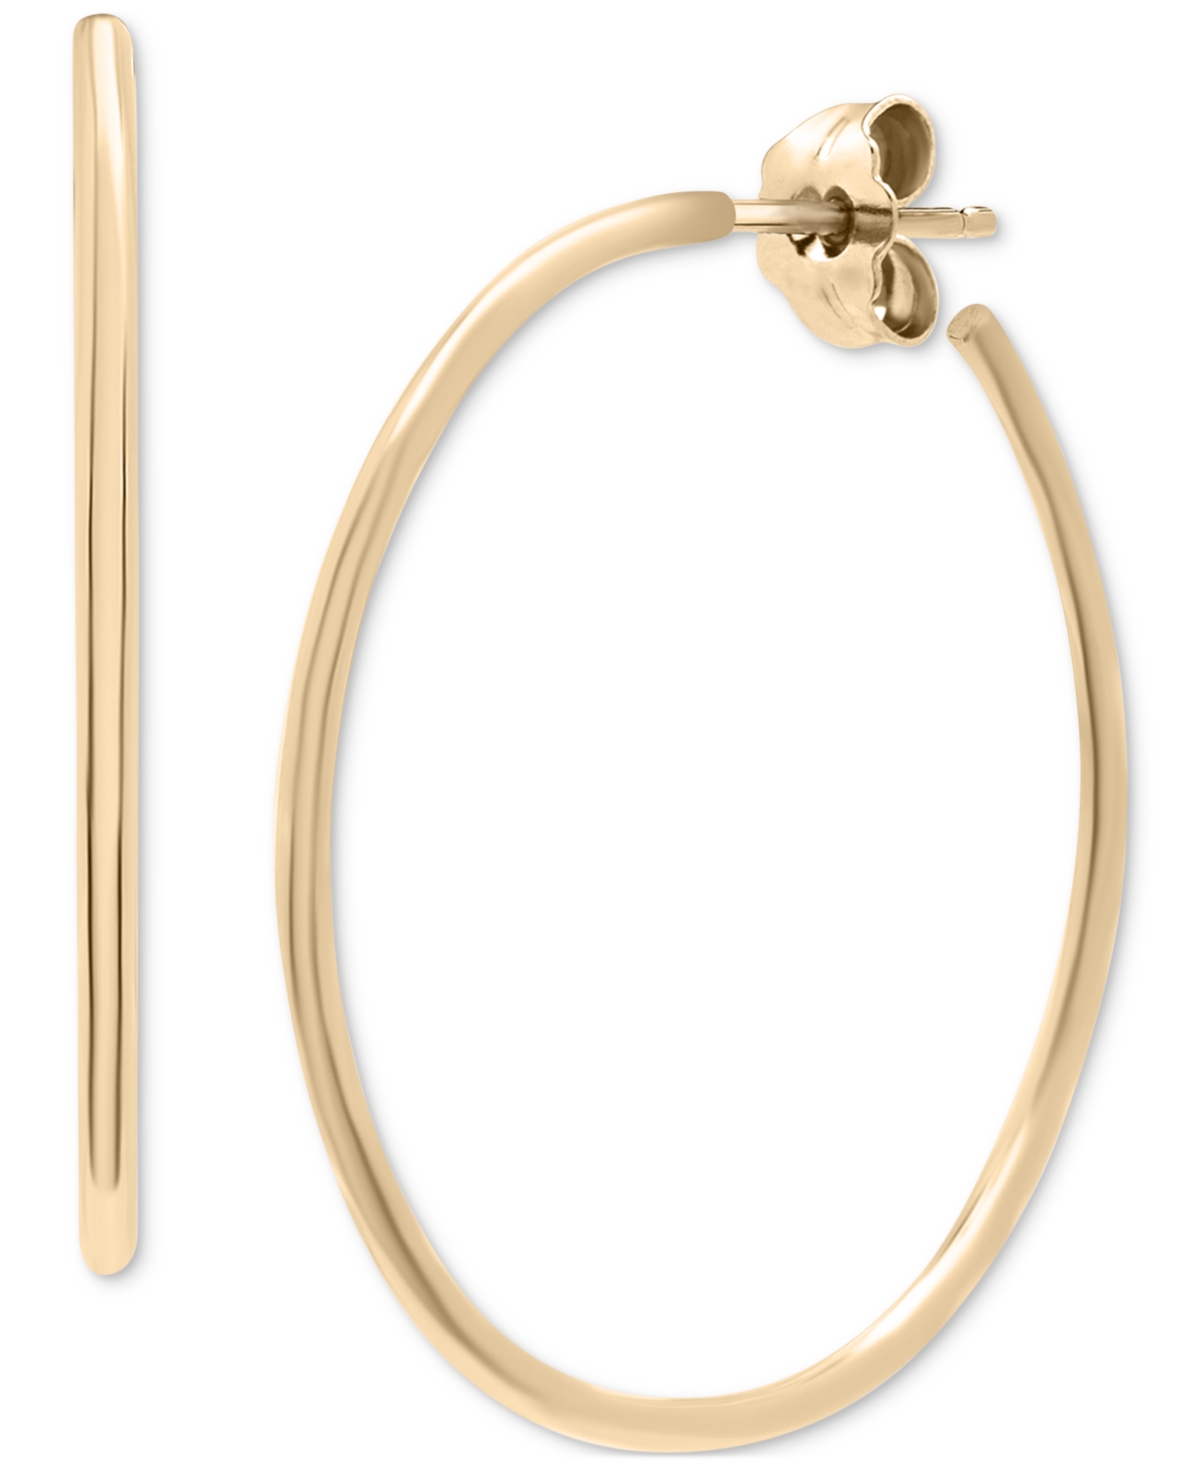 Polished Tube Medium Hoop Earrings in Gold Vermeil, Created for Macy's - Gold Vermeil